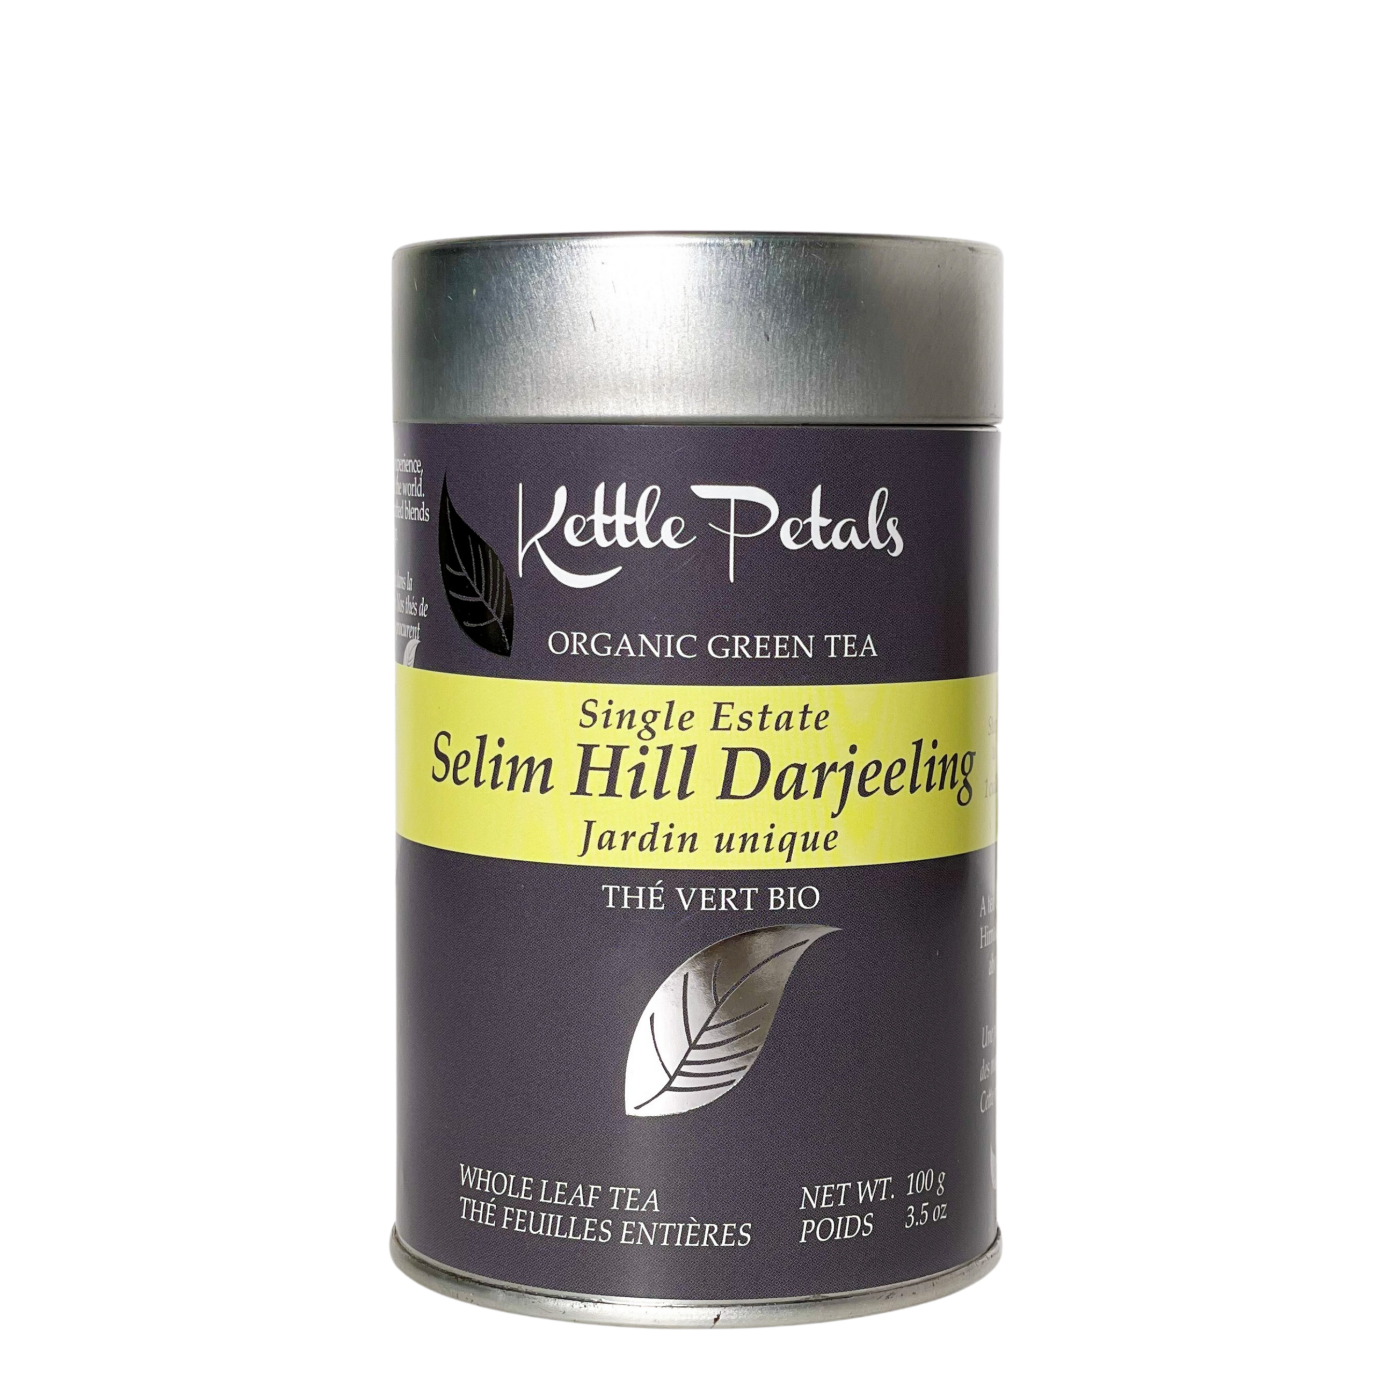 Selim Hill Darjeeling, Organic Tea